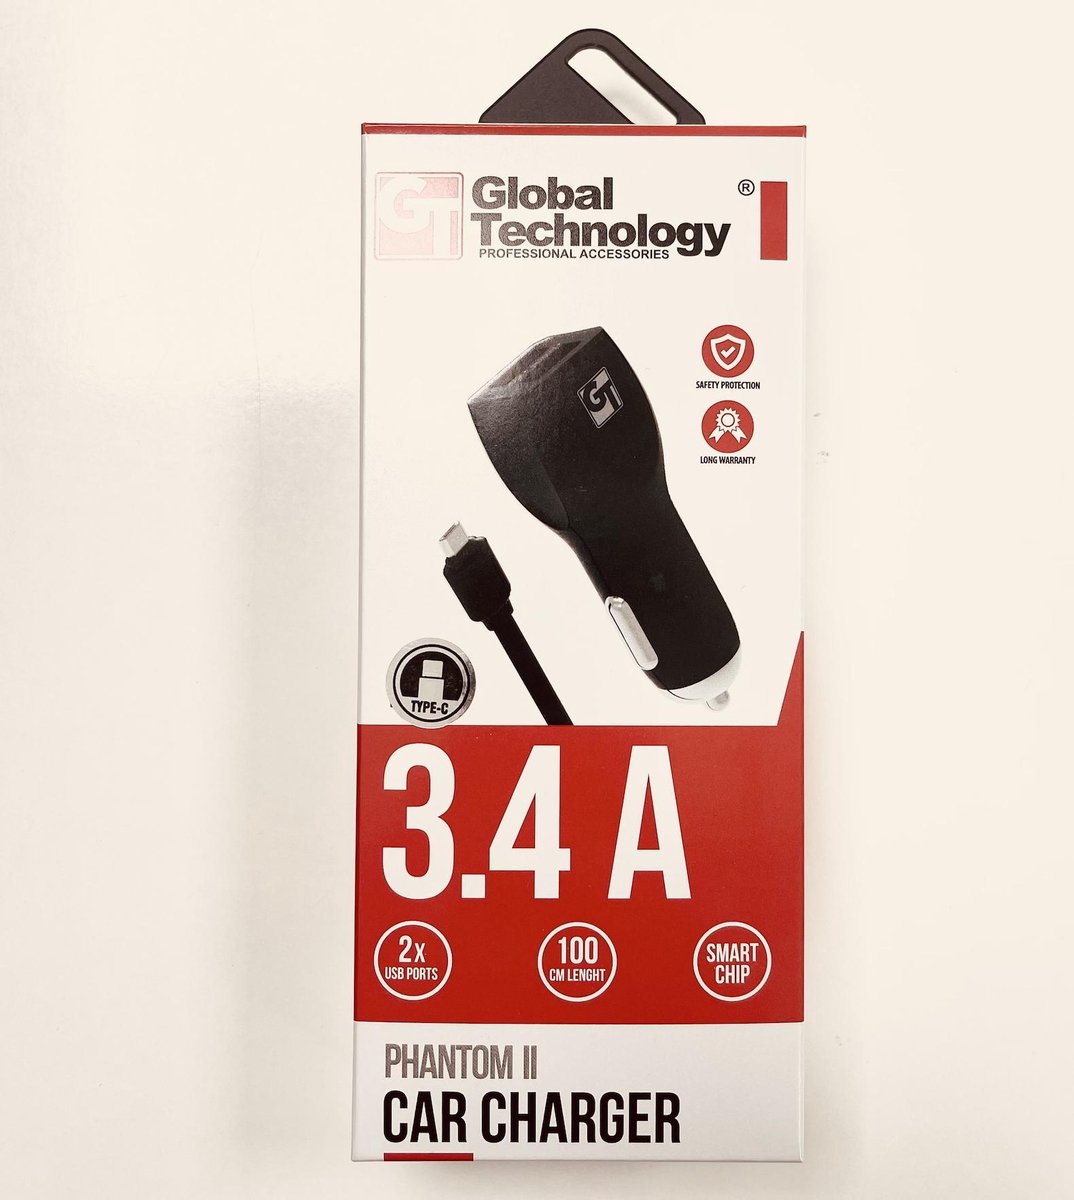 GT - Car Charger Phantom II (2 x USB ports) met 1m USB - C Kabel - 3.4 A (Smart Chip)